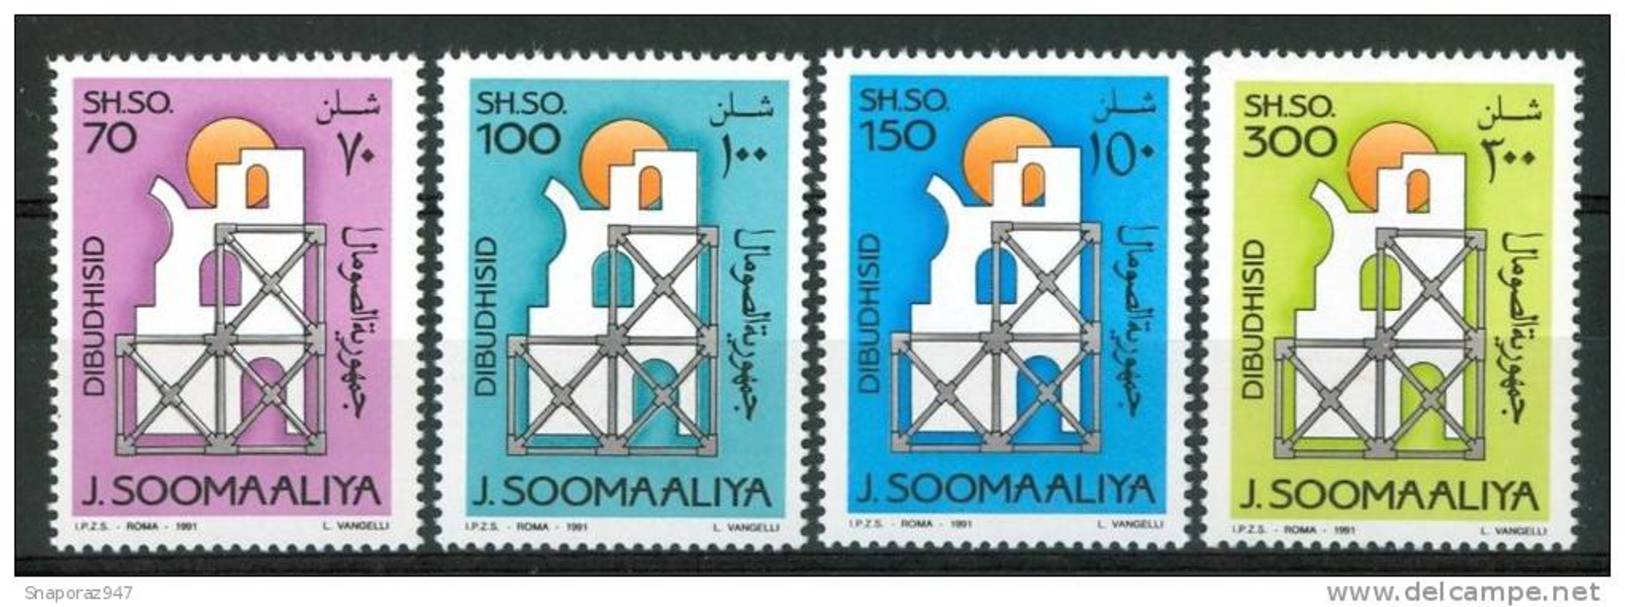 1991 Somalia Ricostruzione Set MNH** - Somalia (1960-...)